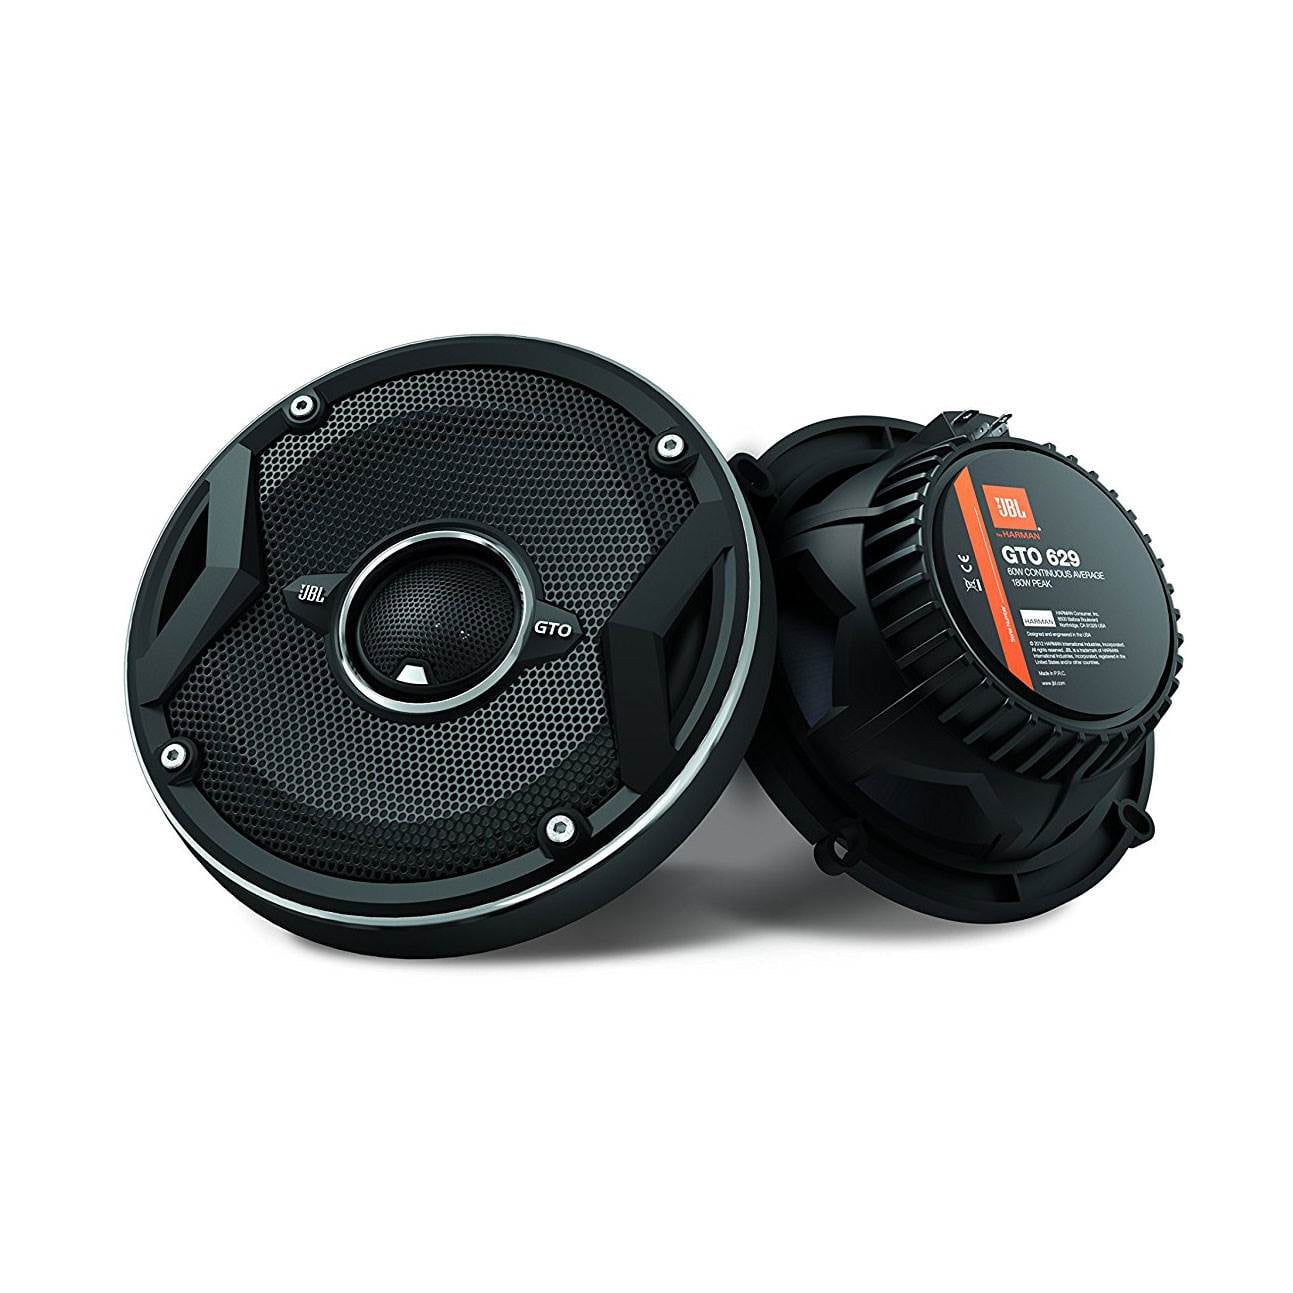 Black JBL Car GX602 180W 6-1/2 Inch Coaxial In-Car Audio Loudspeaker Pair 